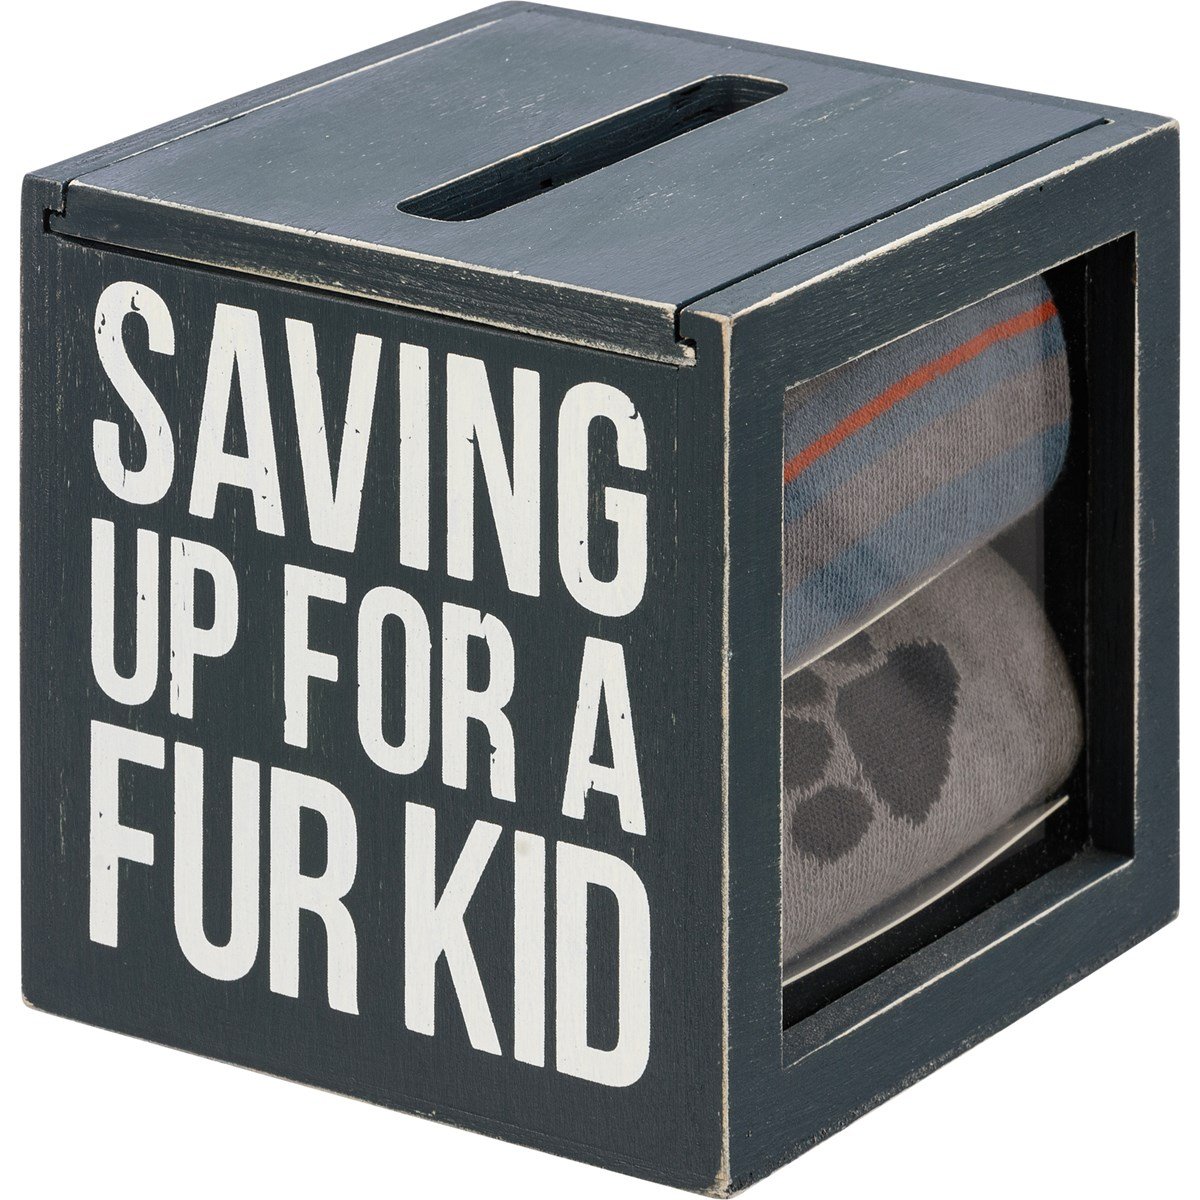 Saving Up For A Fur Kid Bank And Socks Set - Wood, Glass, Cotton, Nylon, Spandex, Ribbon